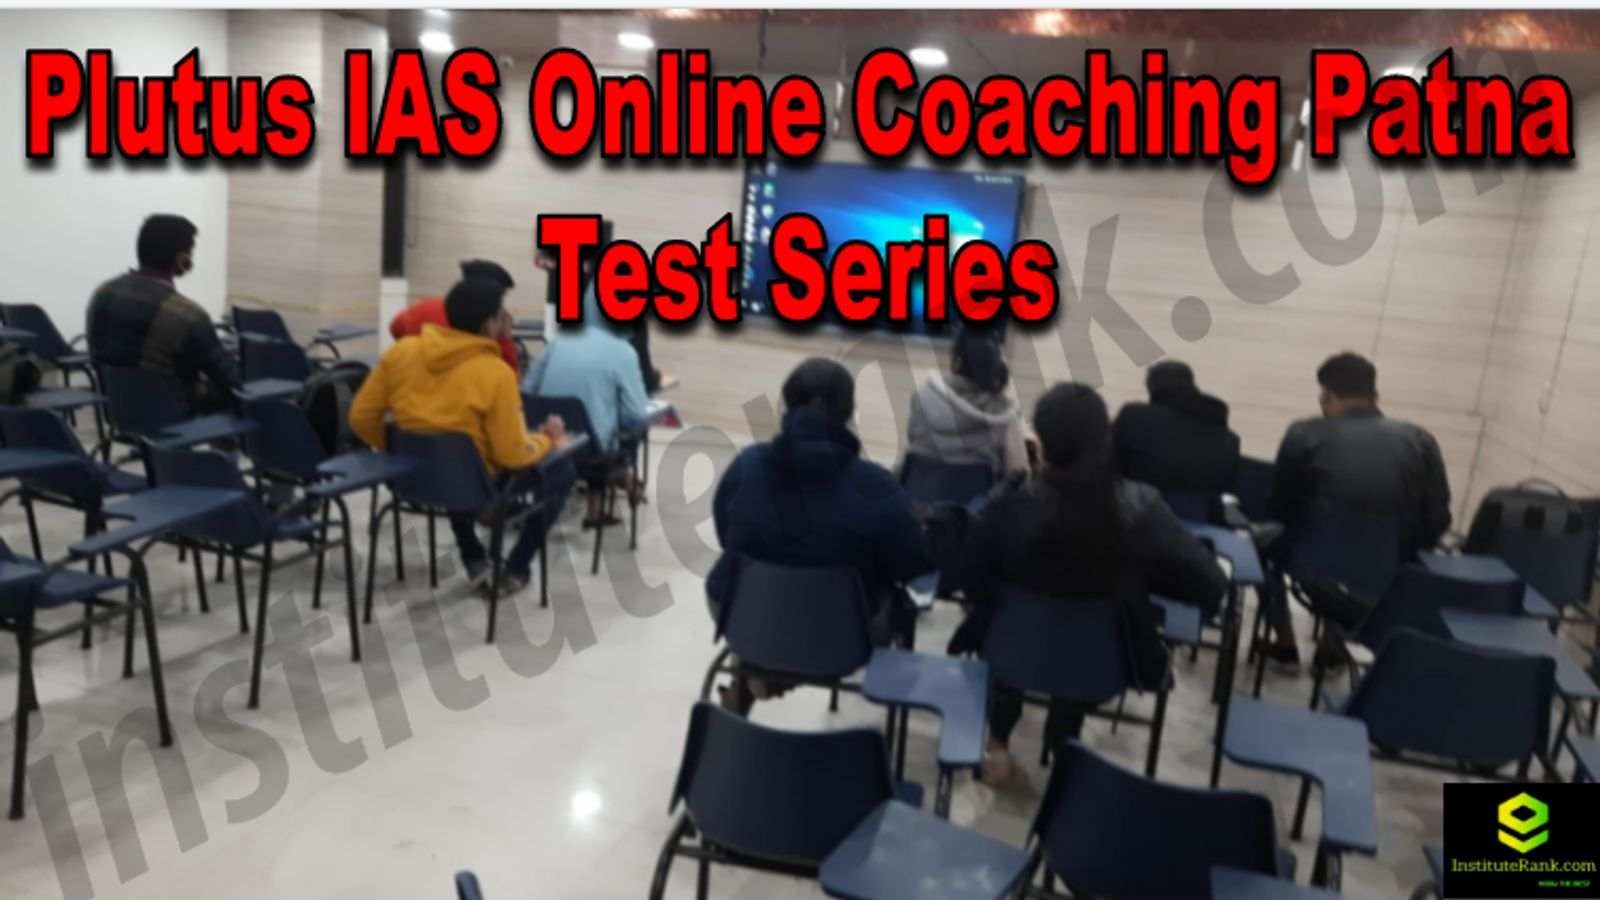 Plutus IAS Online Coaching Patna Reviews Test Series